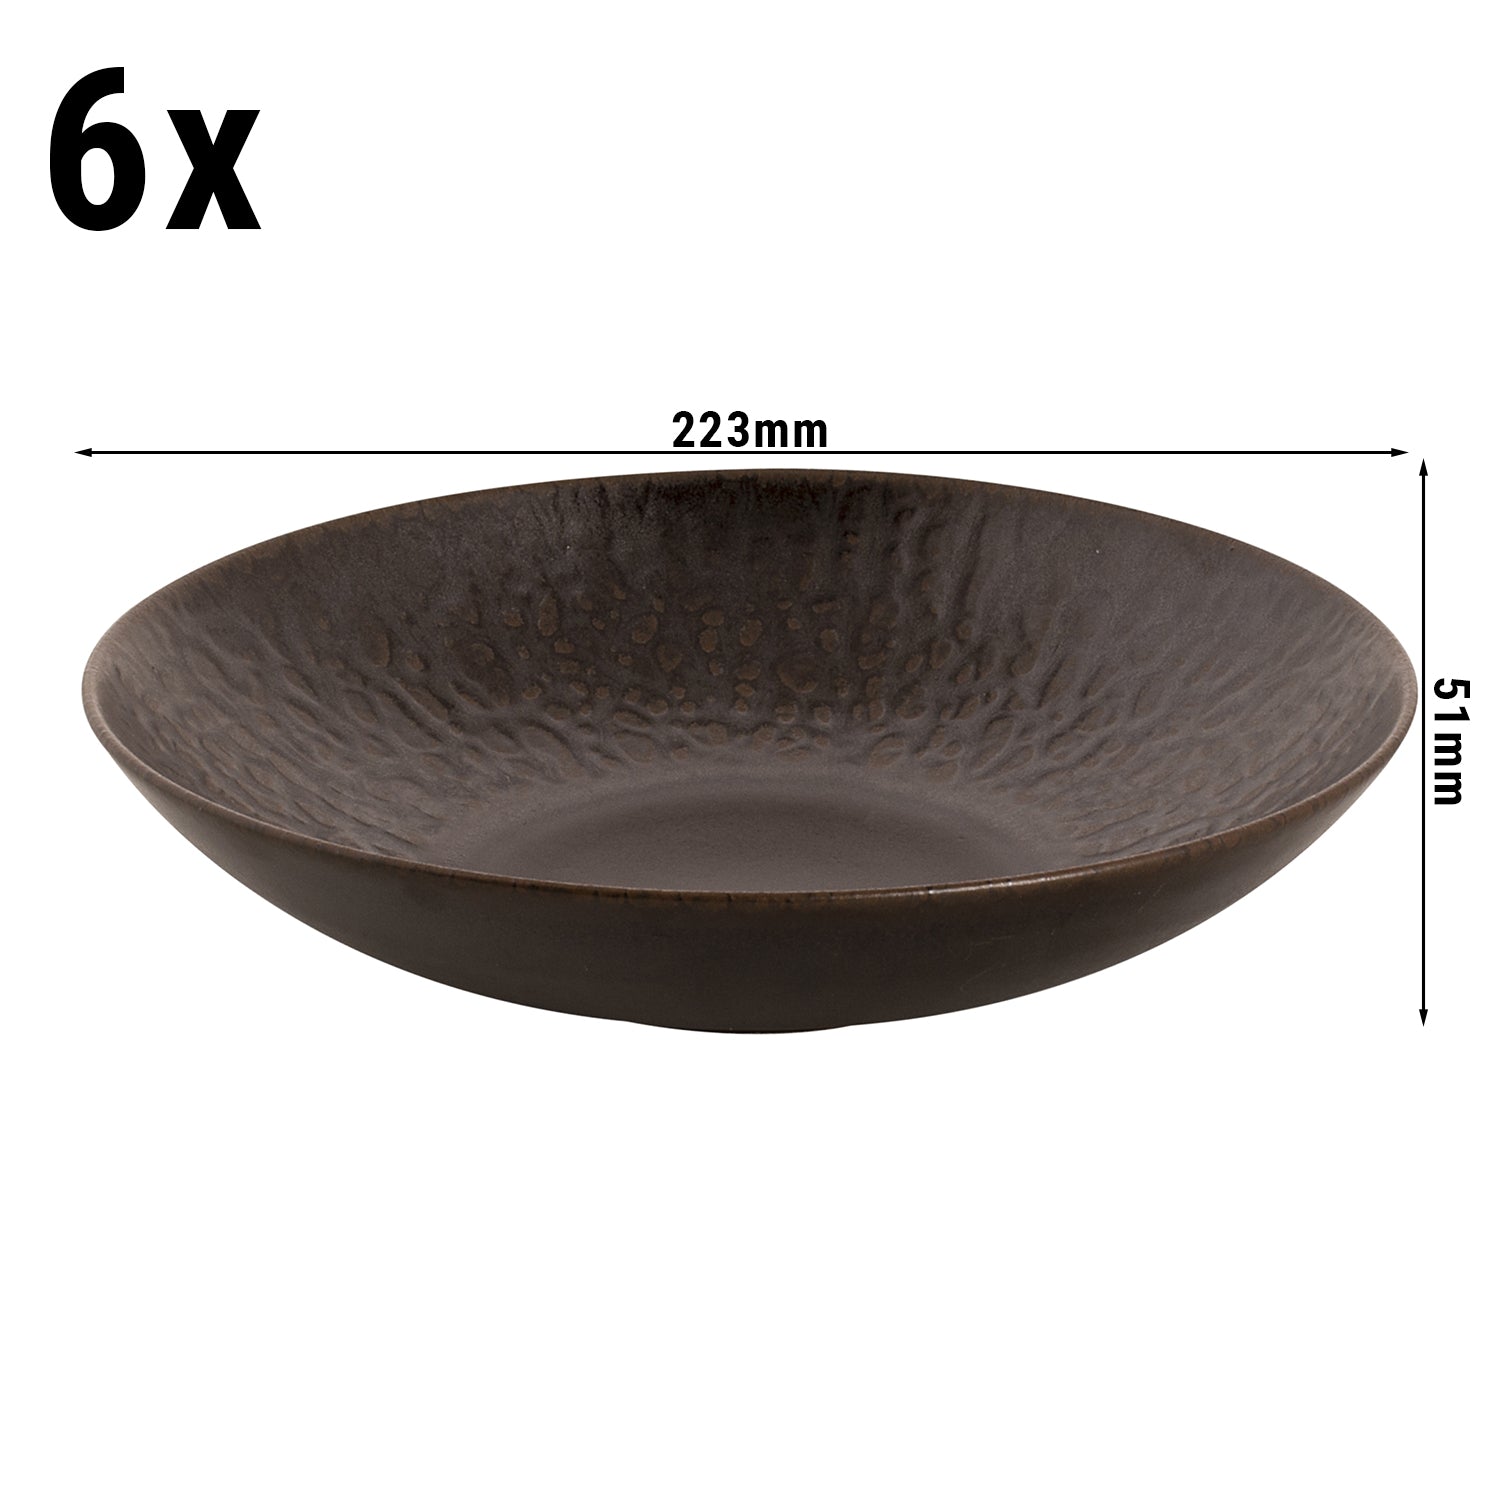 (6 stk.) Rust - Dyb tallerken - Ø 22 cm - Brun